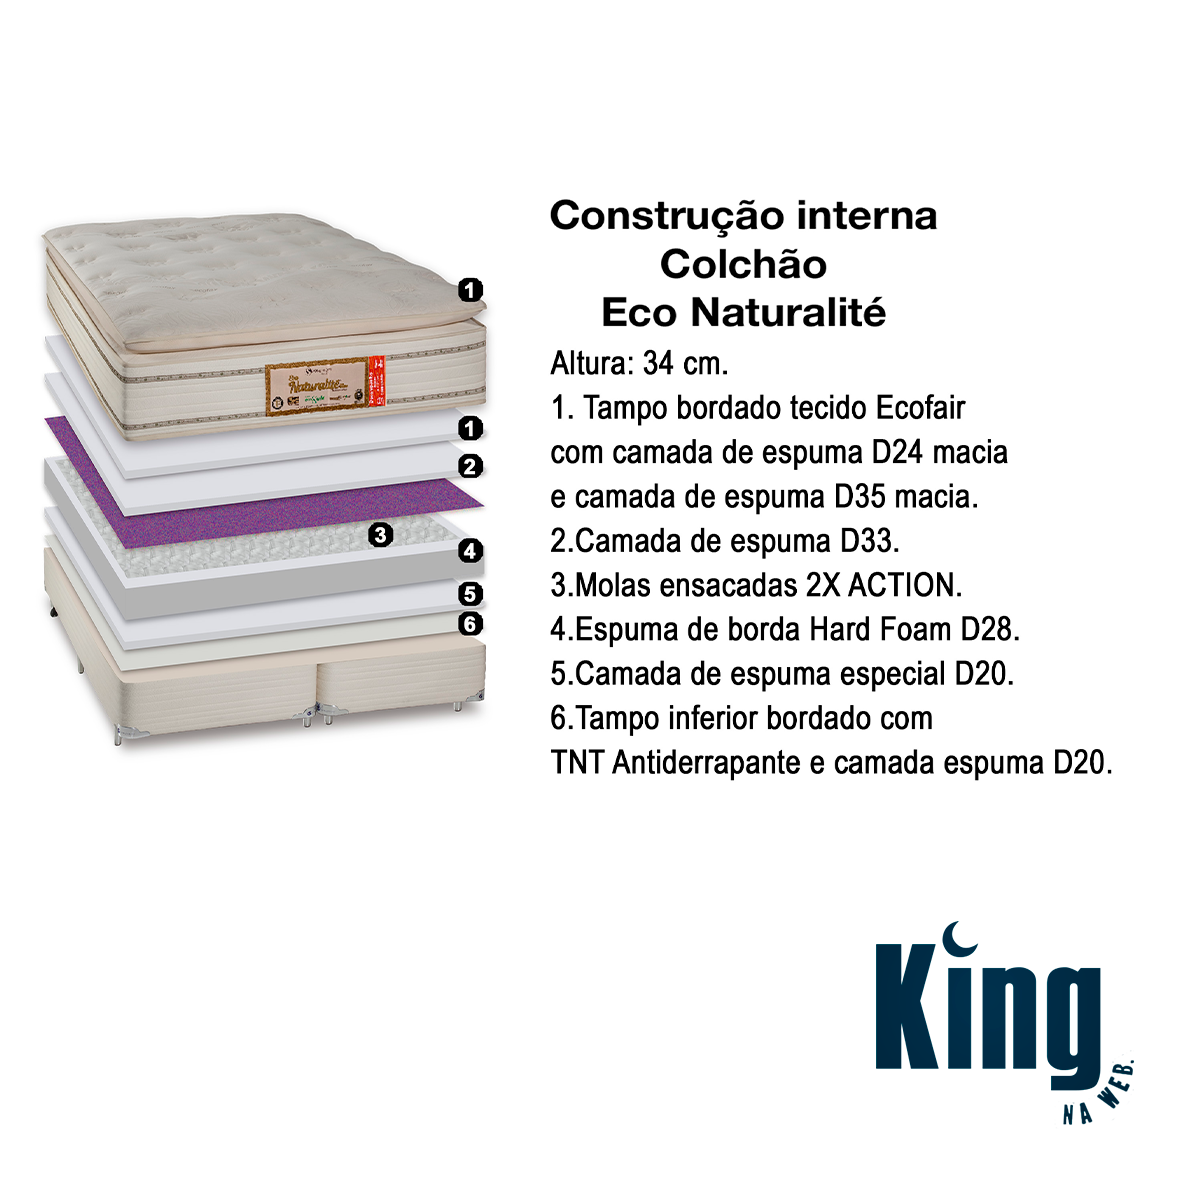 Colchão King Sankonfort Eco Naturalité Pillow Top Molas Ensacadas - 3